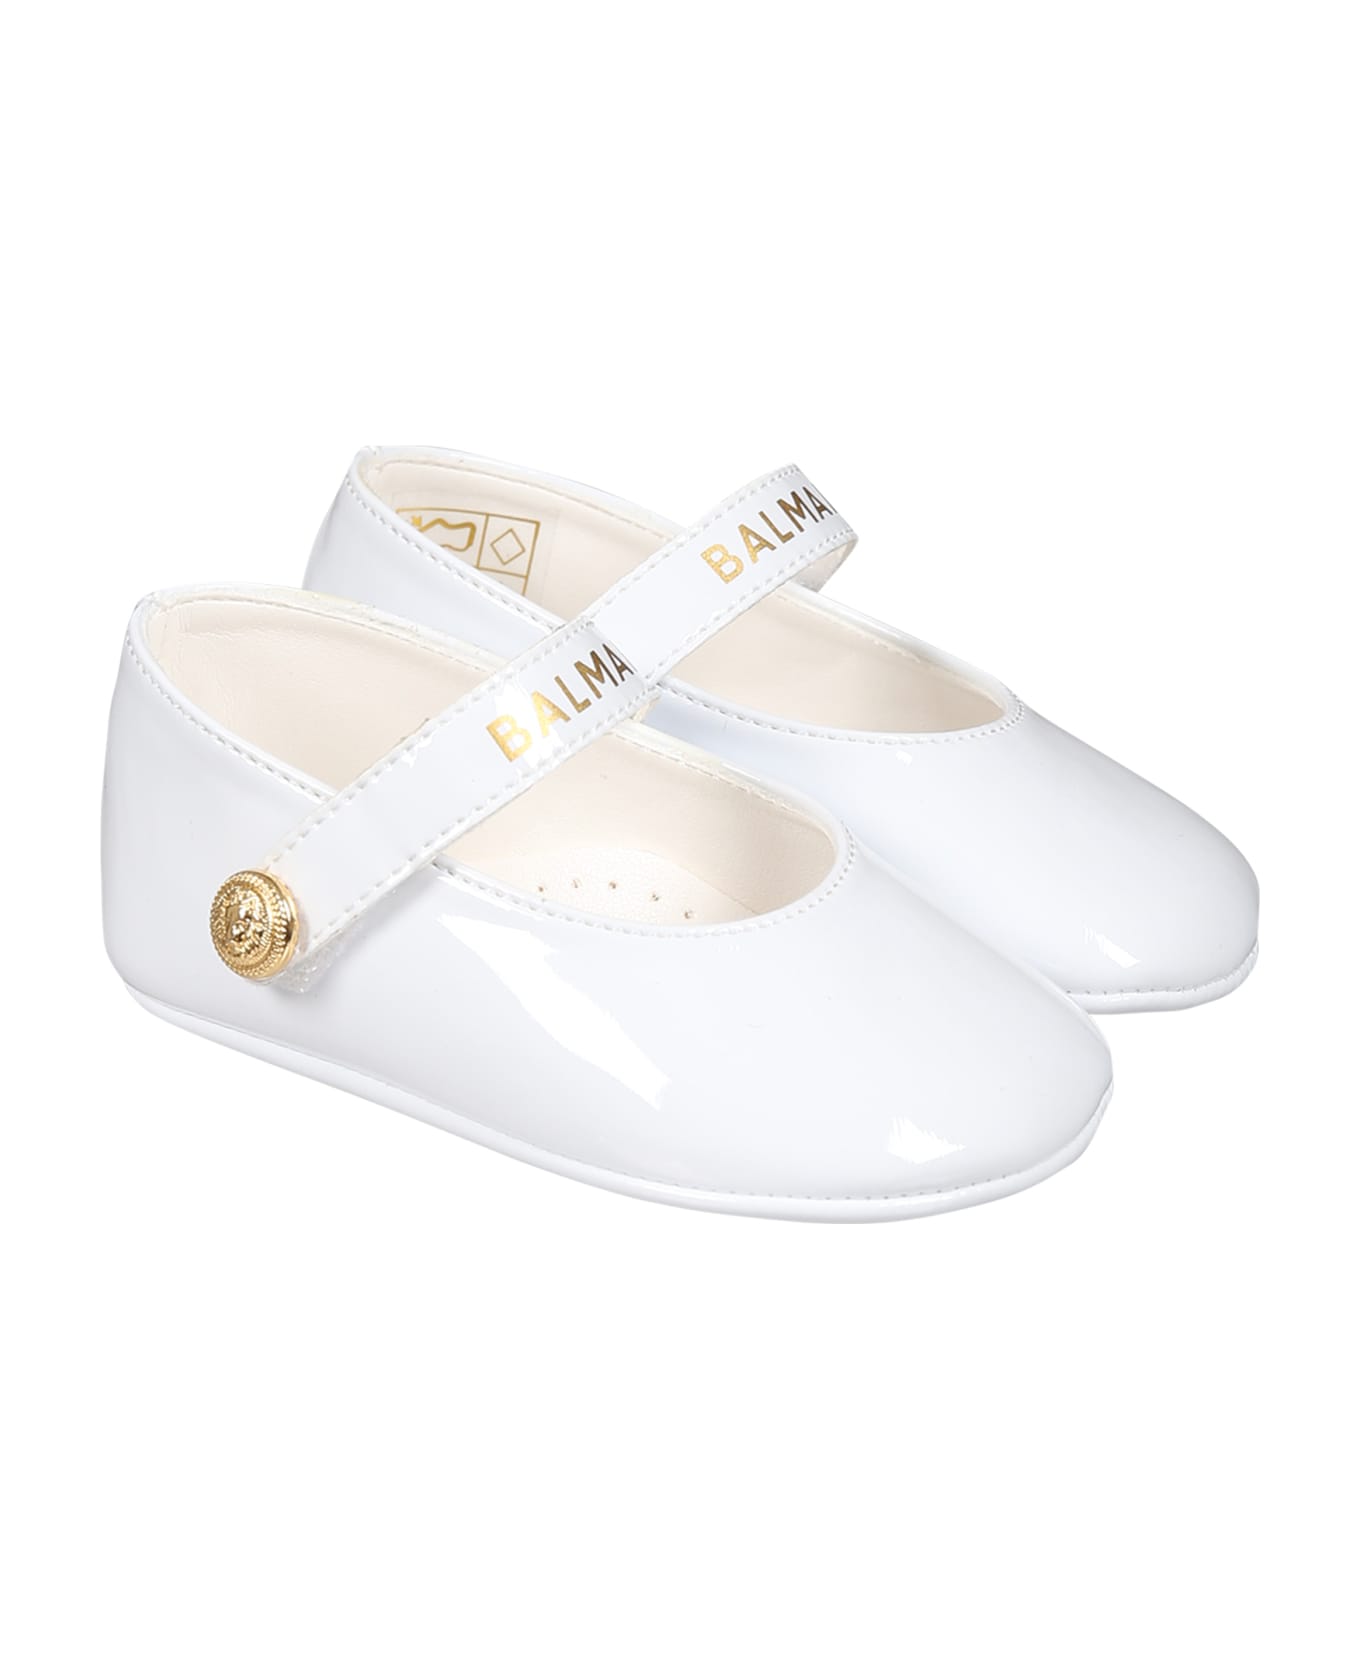 Balmain White Ballet Flat For Baby Girl With Logo - White シューズ